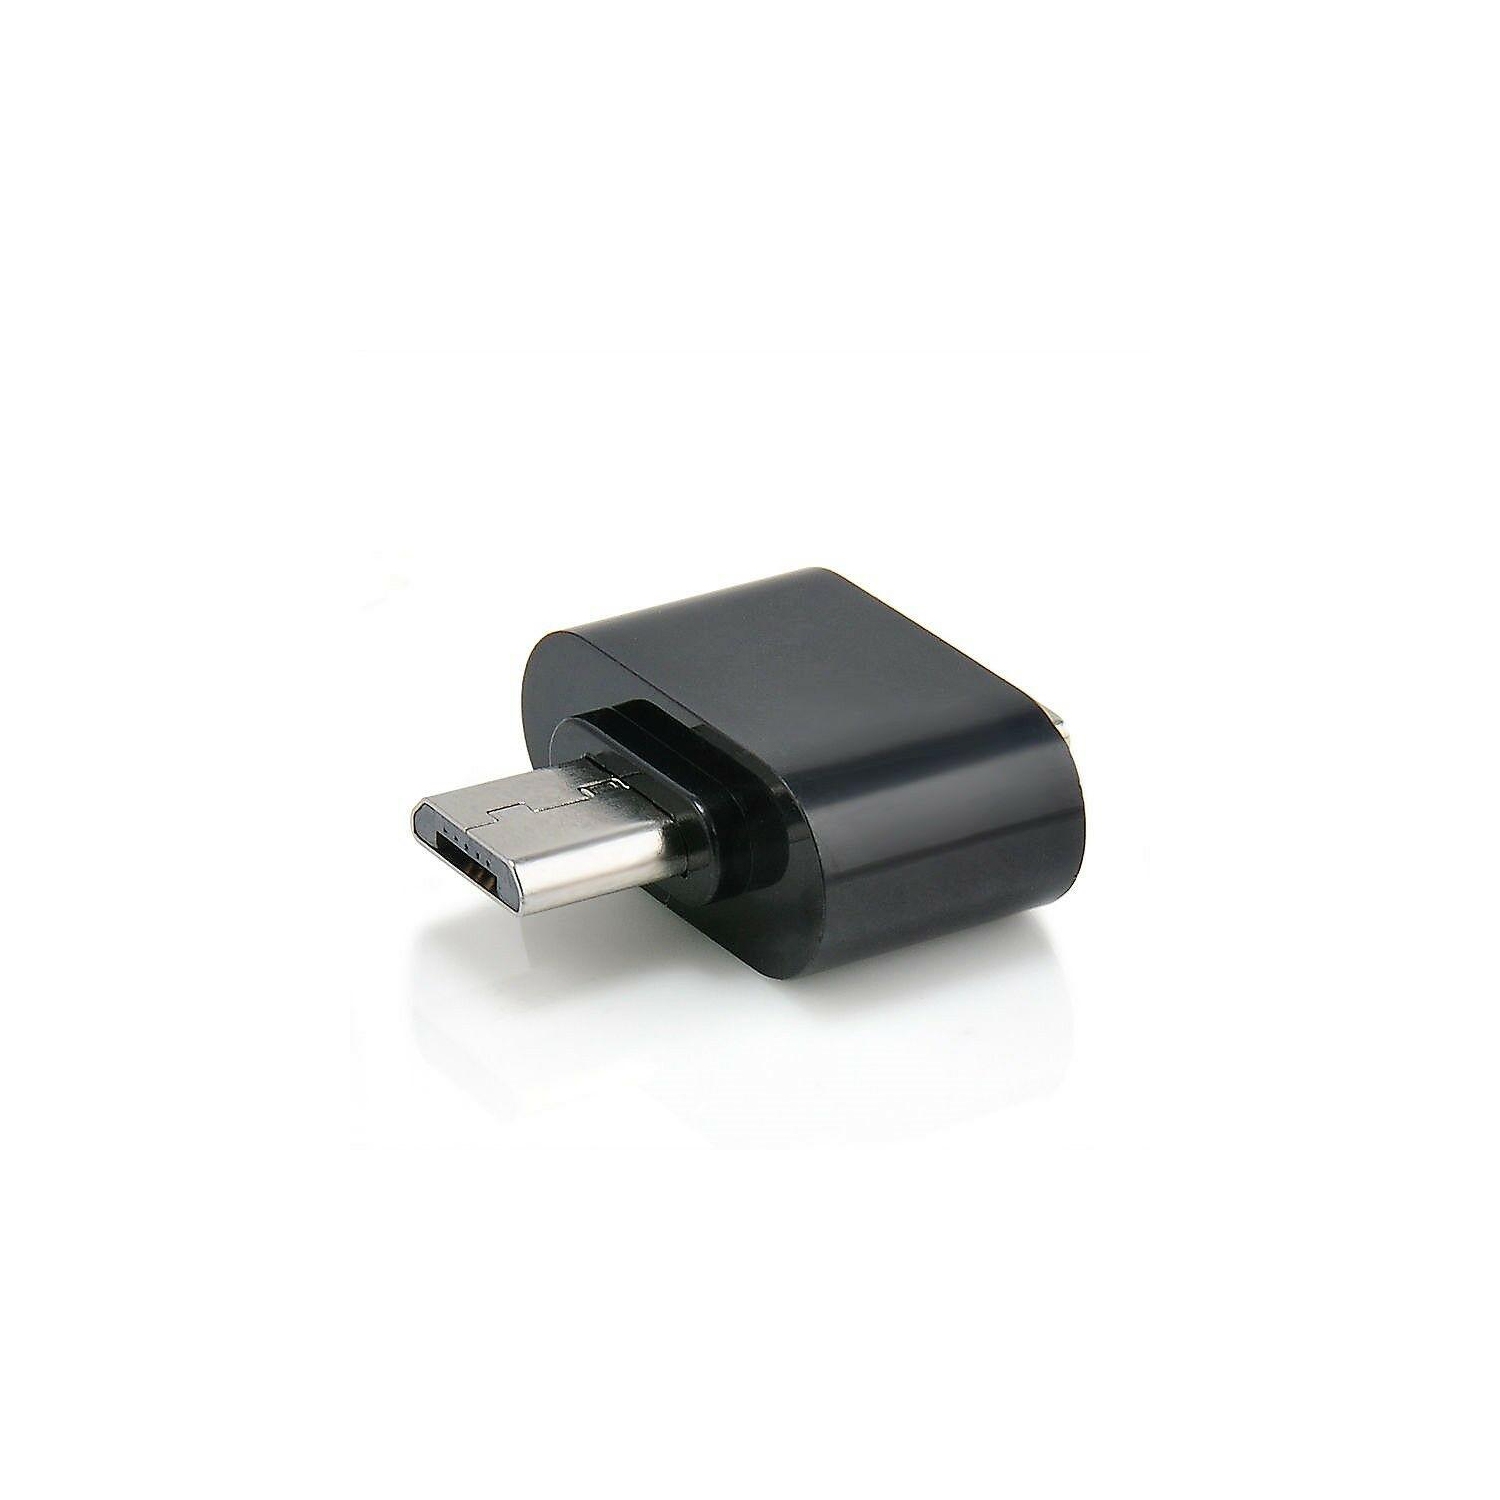 Micro USB Male to USB Female OTG Adapter Converter For LG G4 Samsung S6 S7 Edge